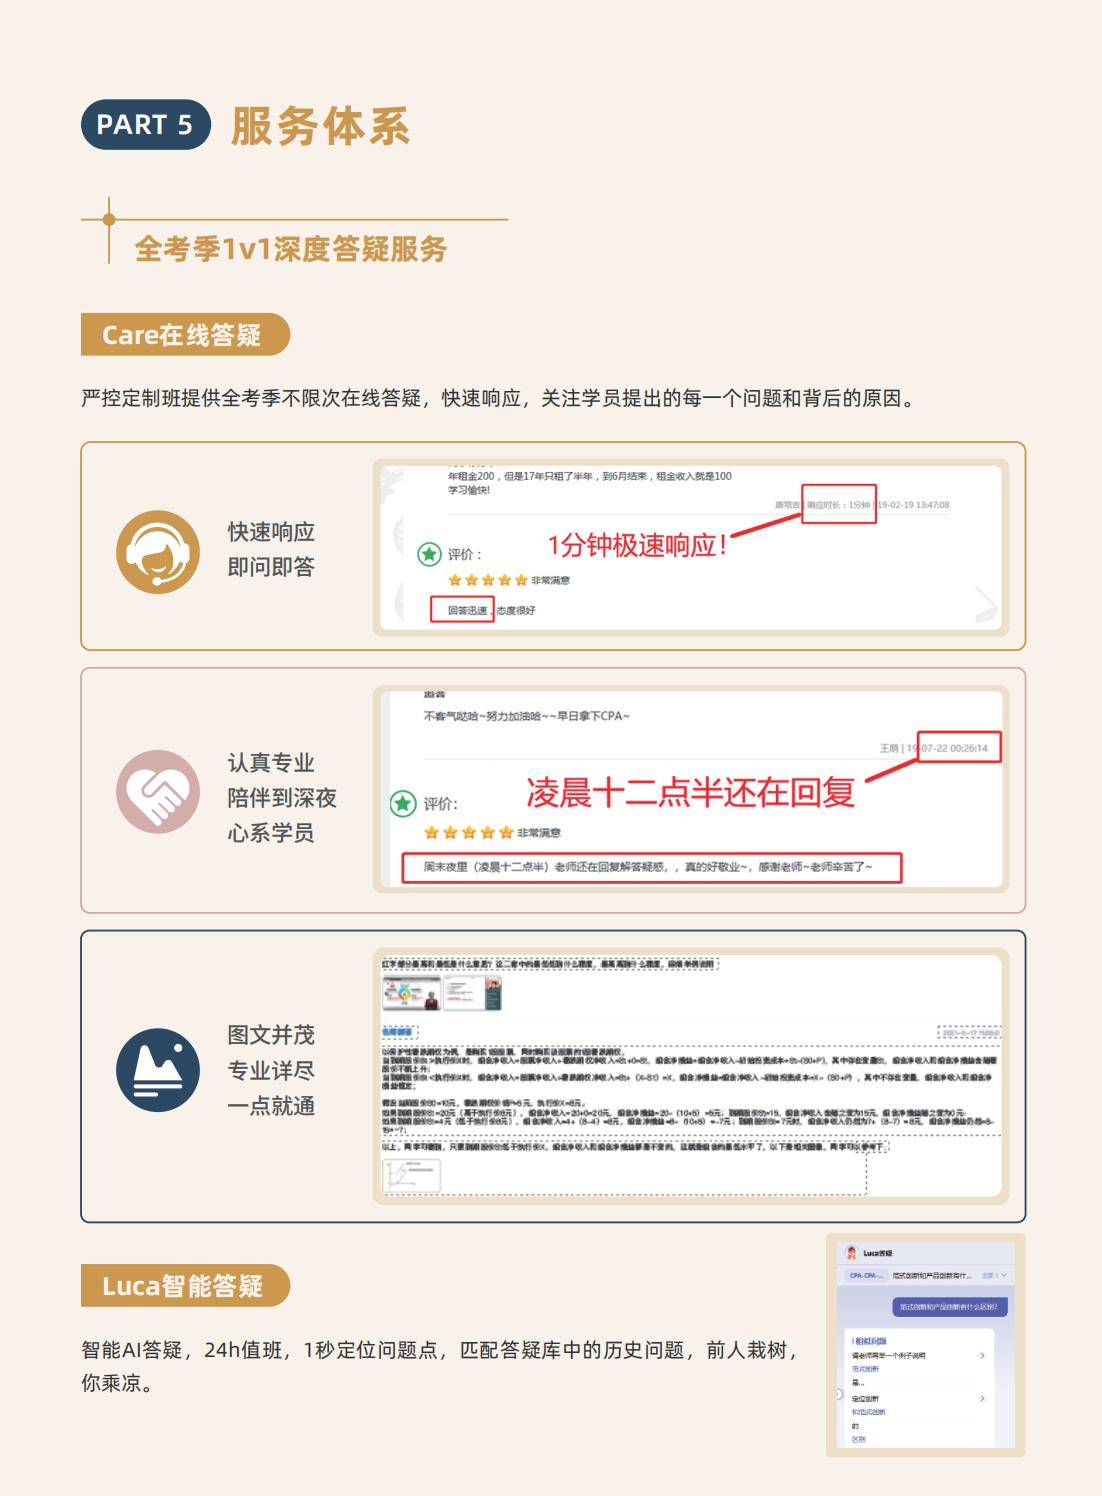 http://simg01.gaodunwangxiao.com/uploadfiles/product-center/202405/11/f7015_20240511101208.jpg